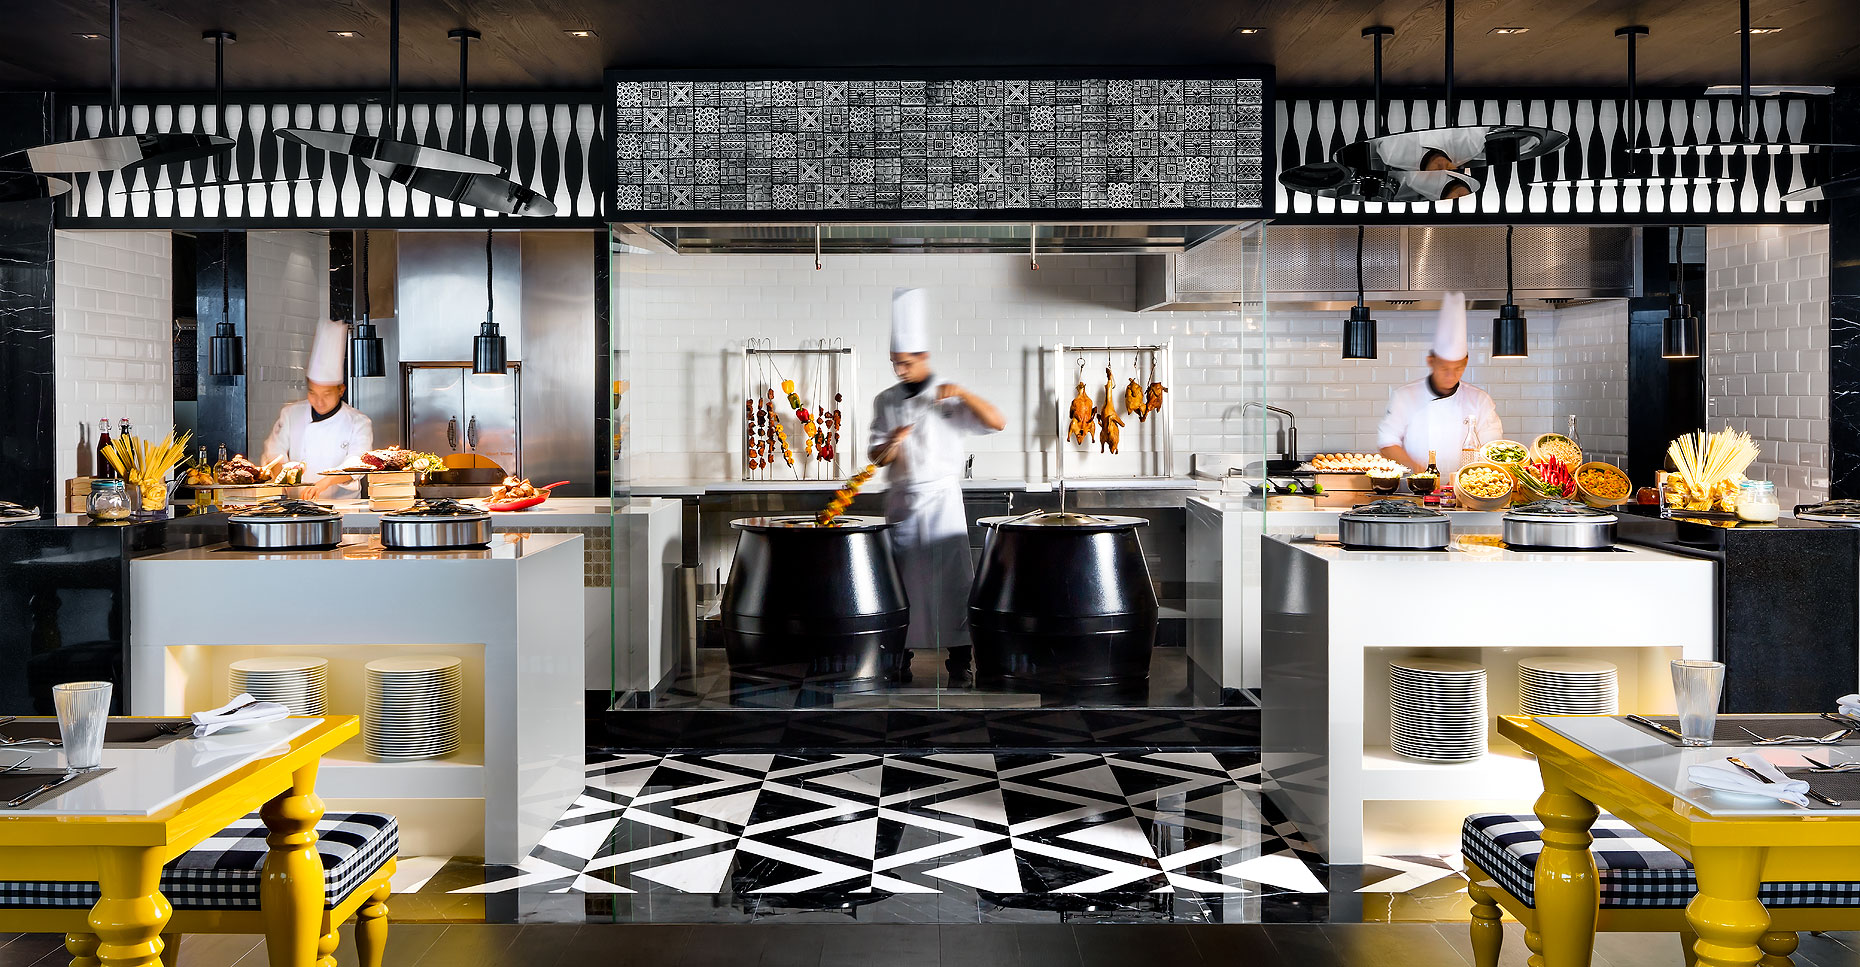 Fairmont Fujairah Hotel Restaurant by Stickman Design Dubai - Restaurant Photography